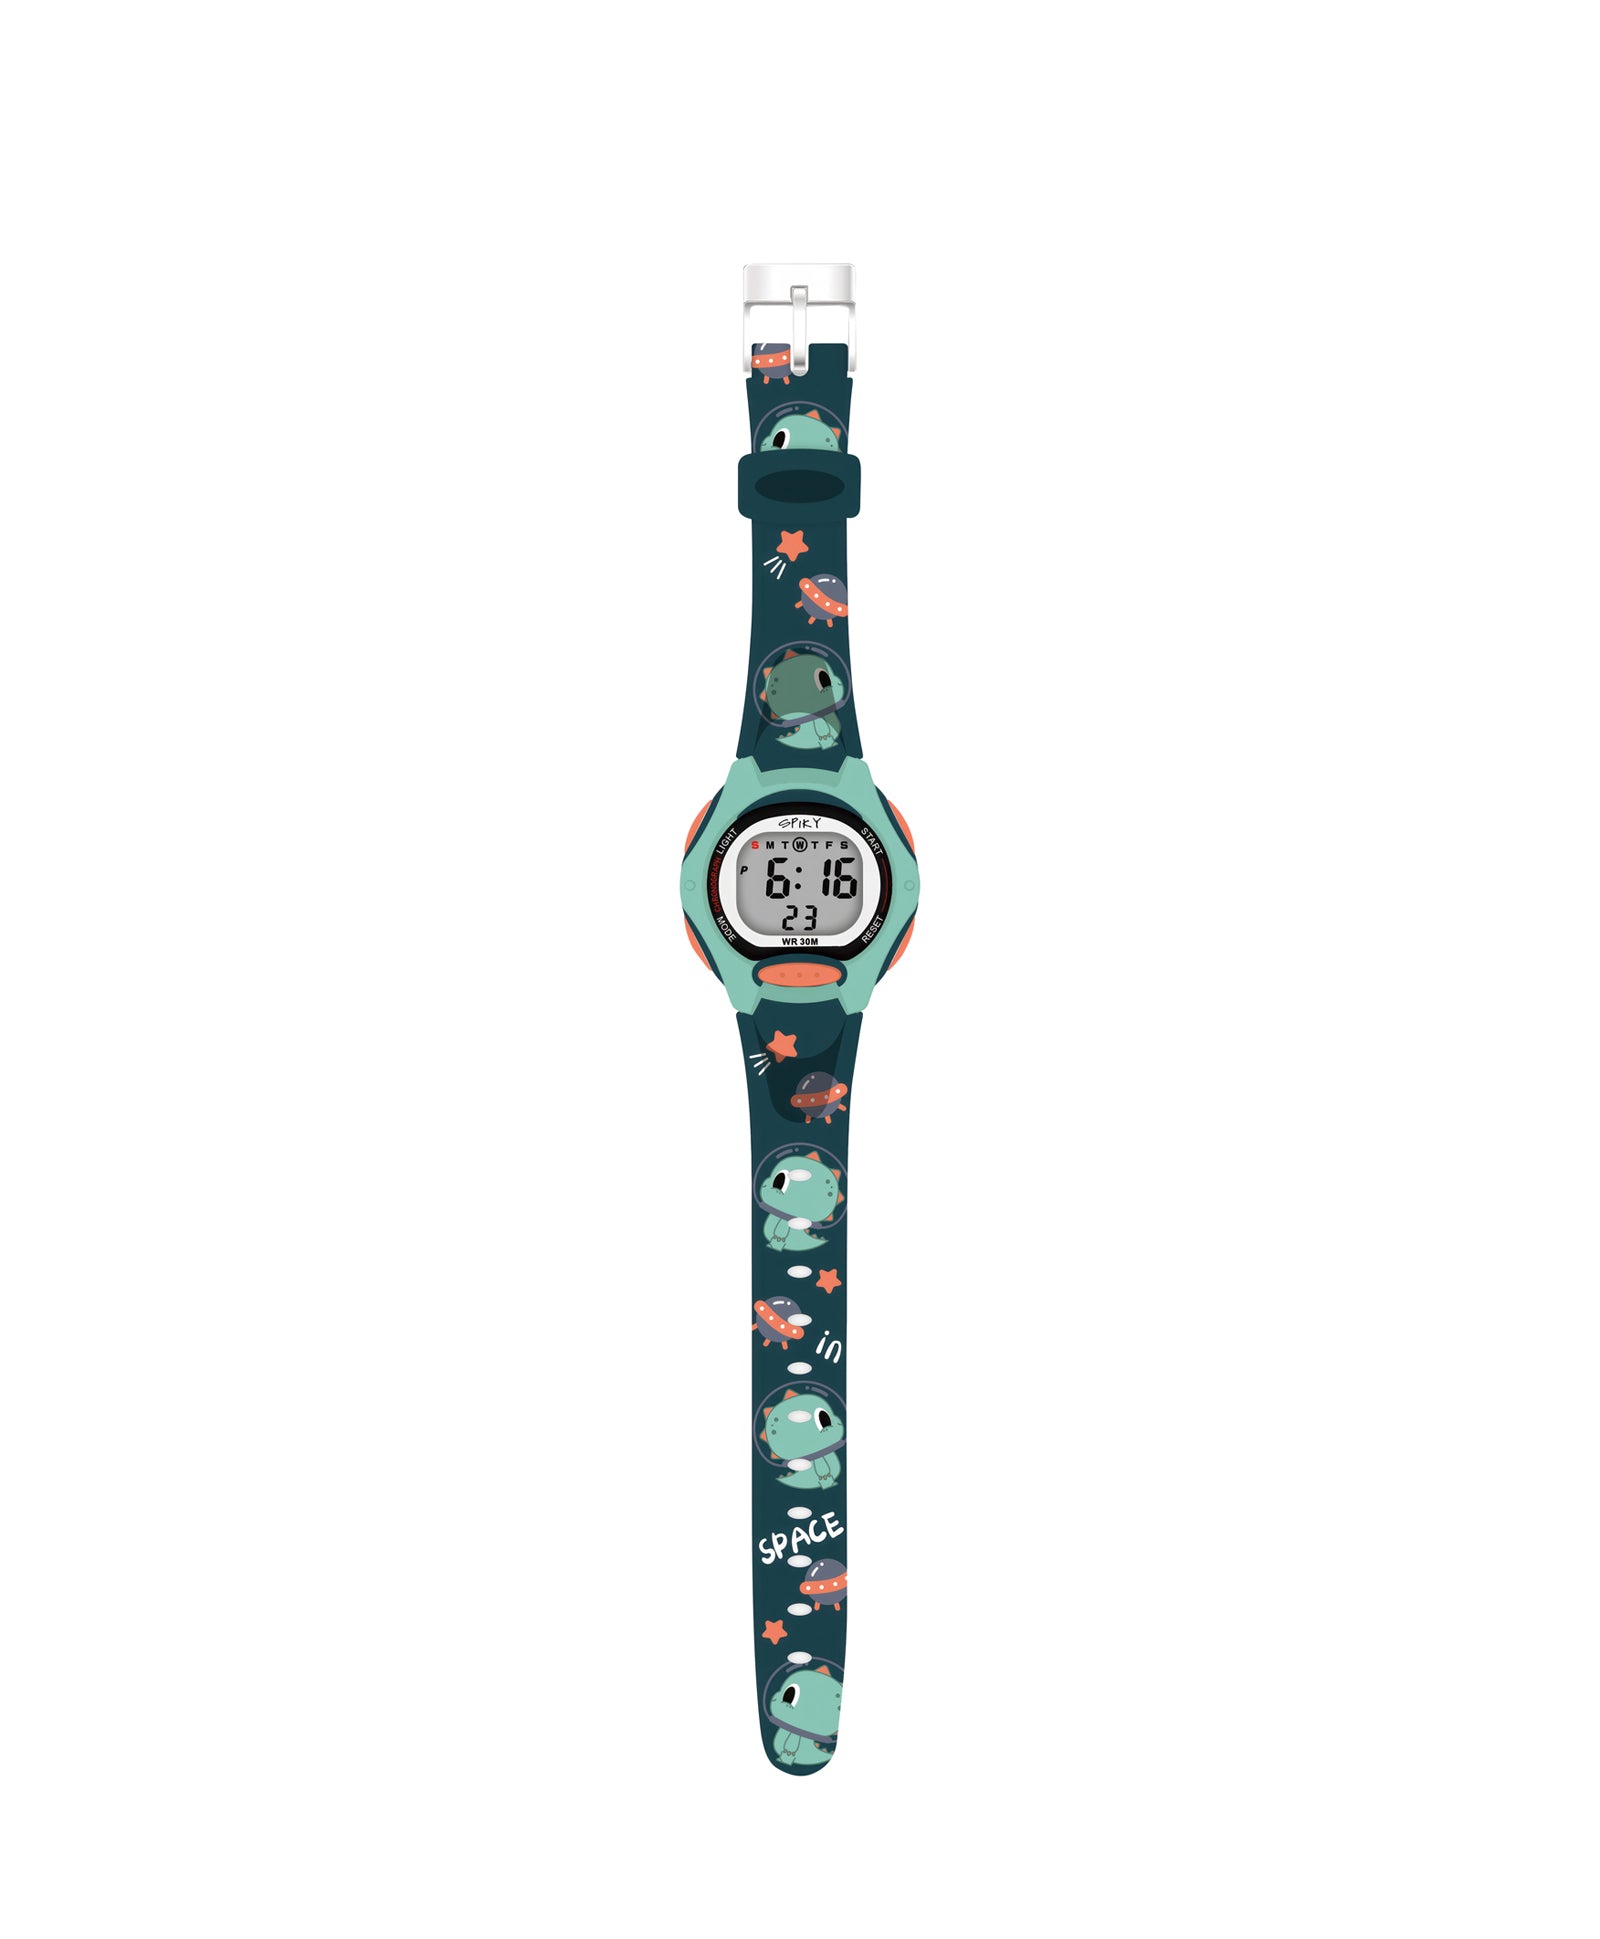 Spiky Eva18 Printed Strap Round Sports Digital Watch - Turquoise